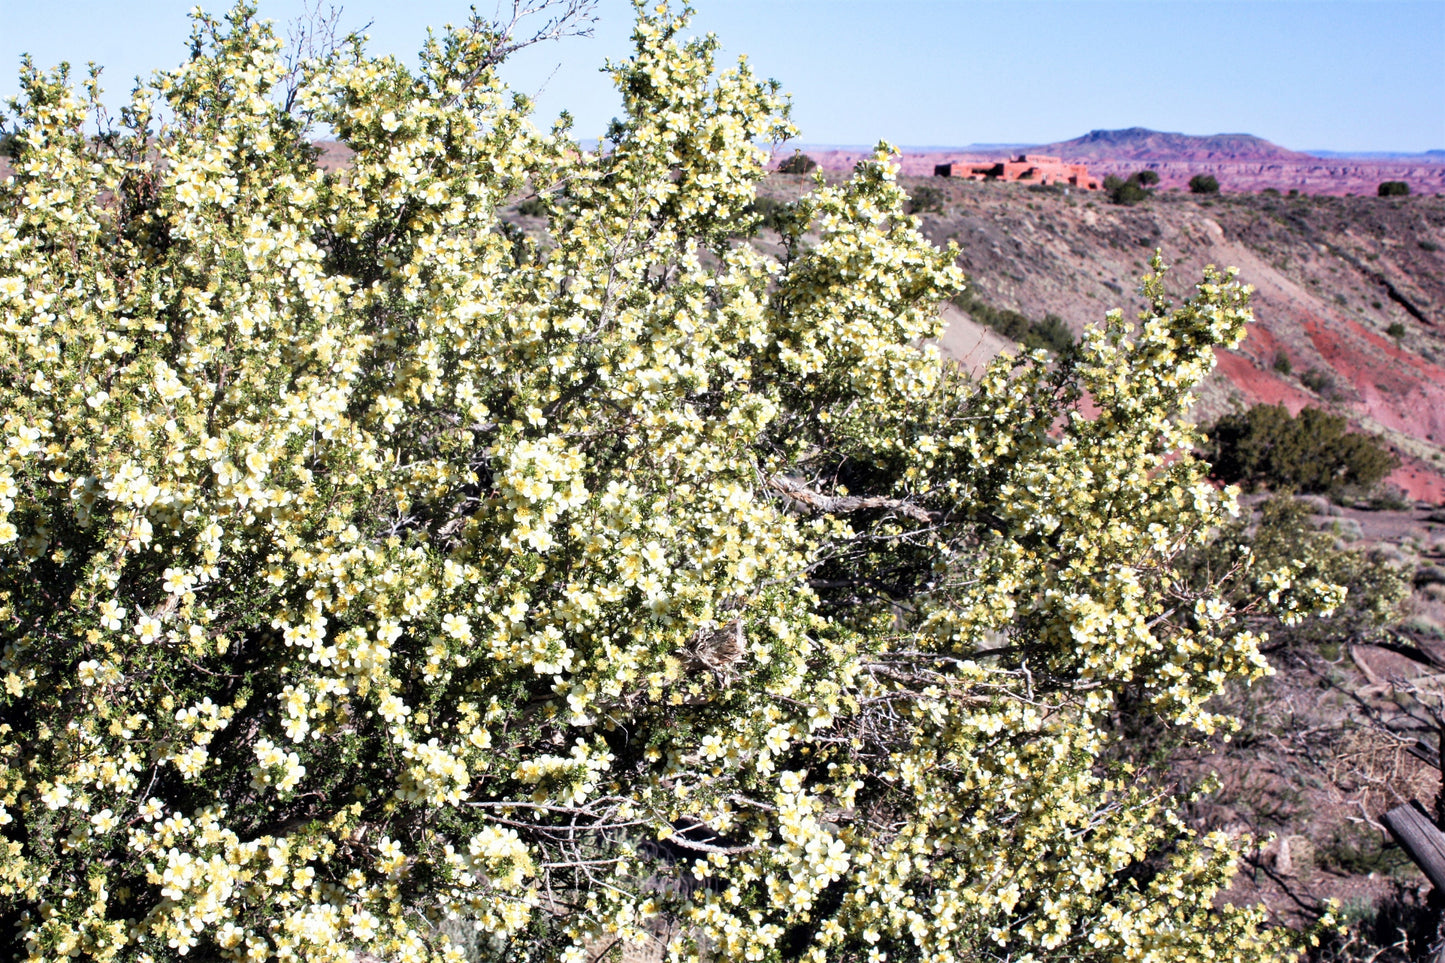 40 STANSBURY CLIFFROSE Purshia Stansburiana Cliff Rose Native Desert Shrub White & Yellow Flower Seeds